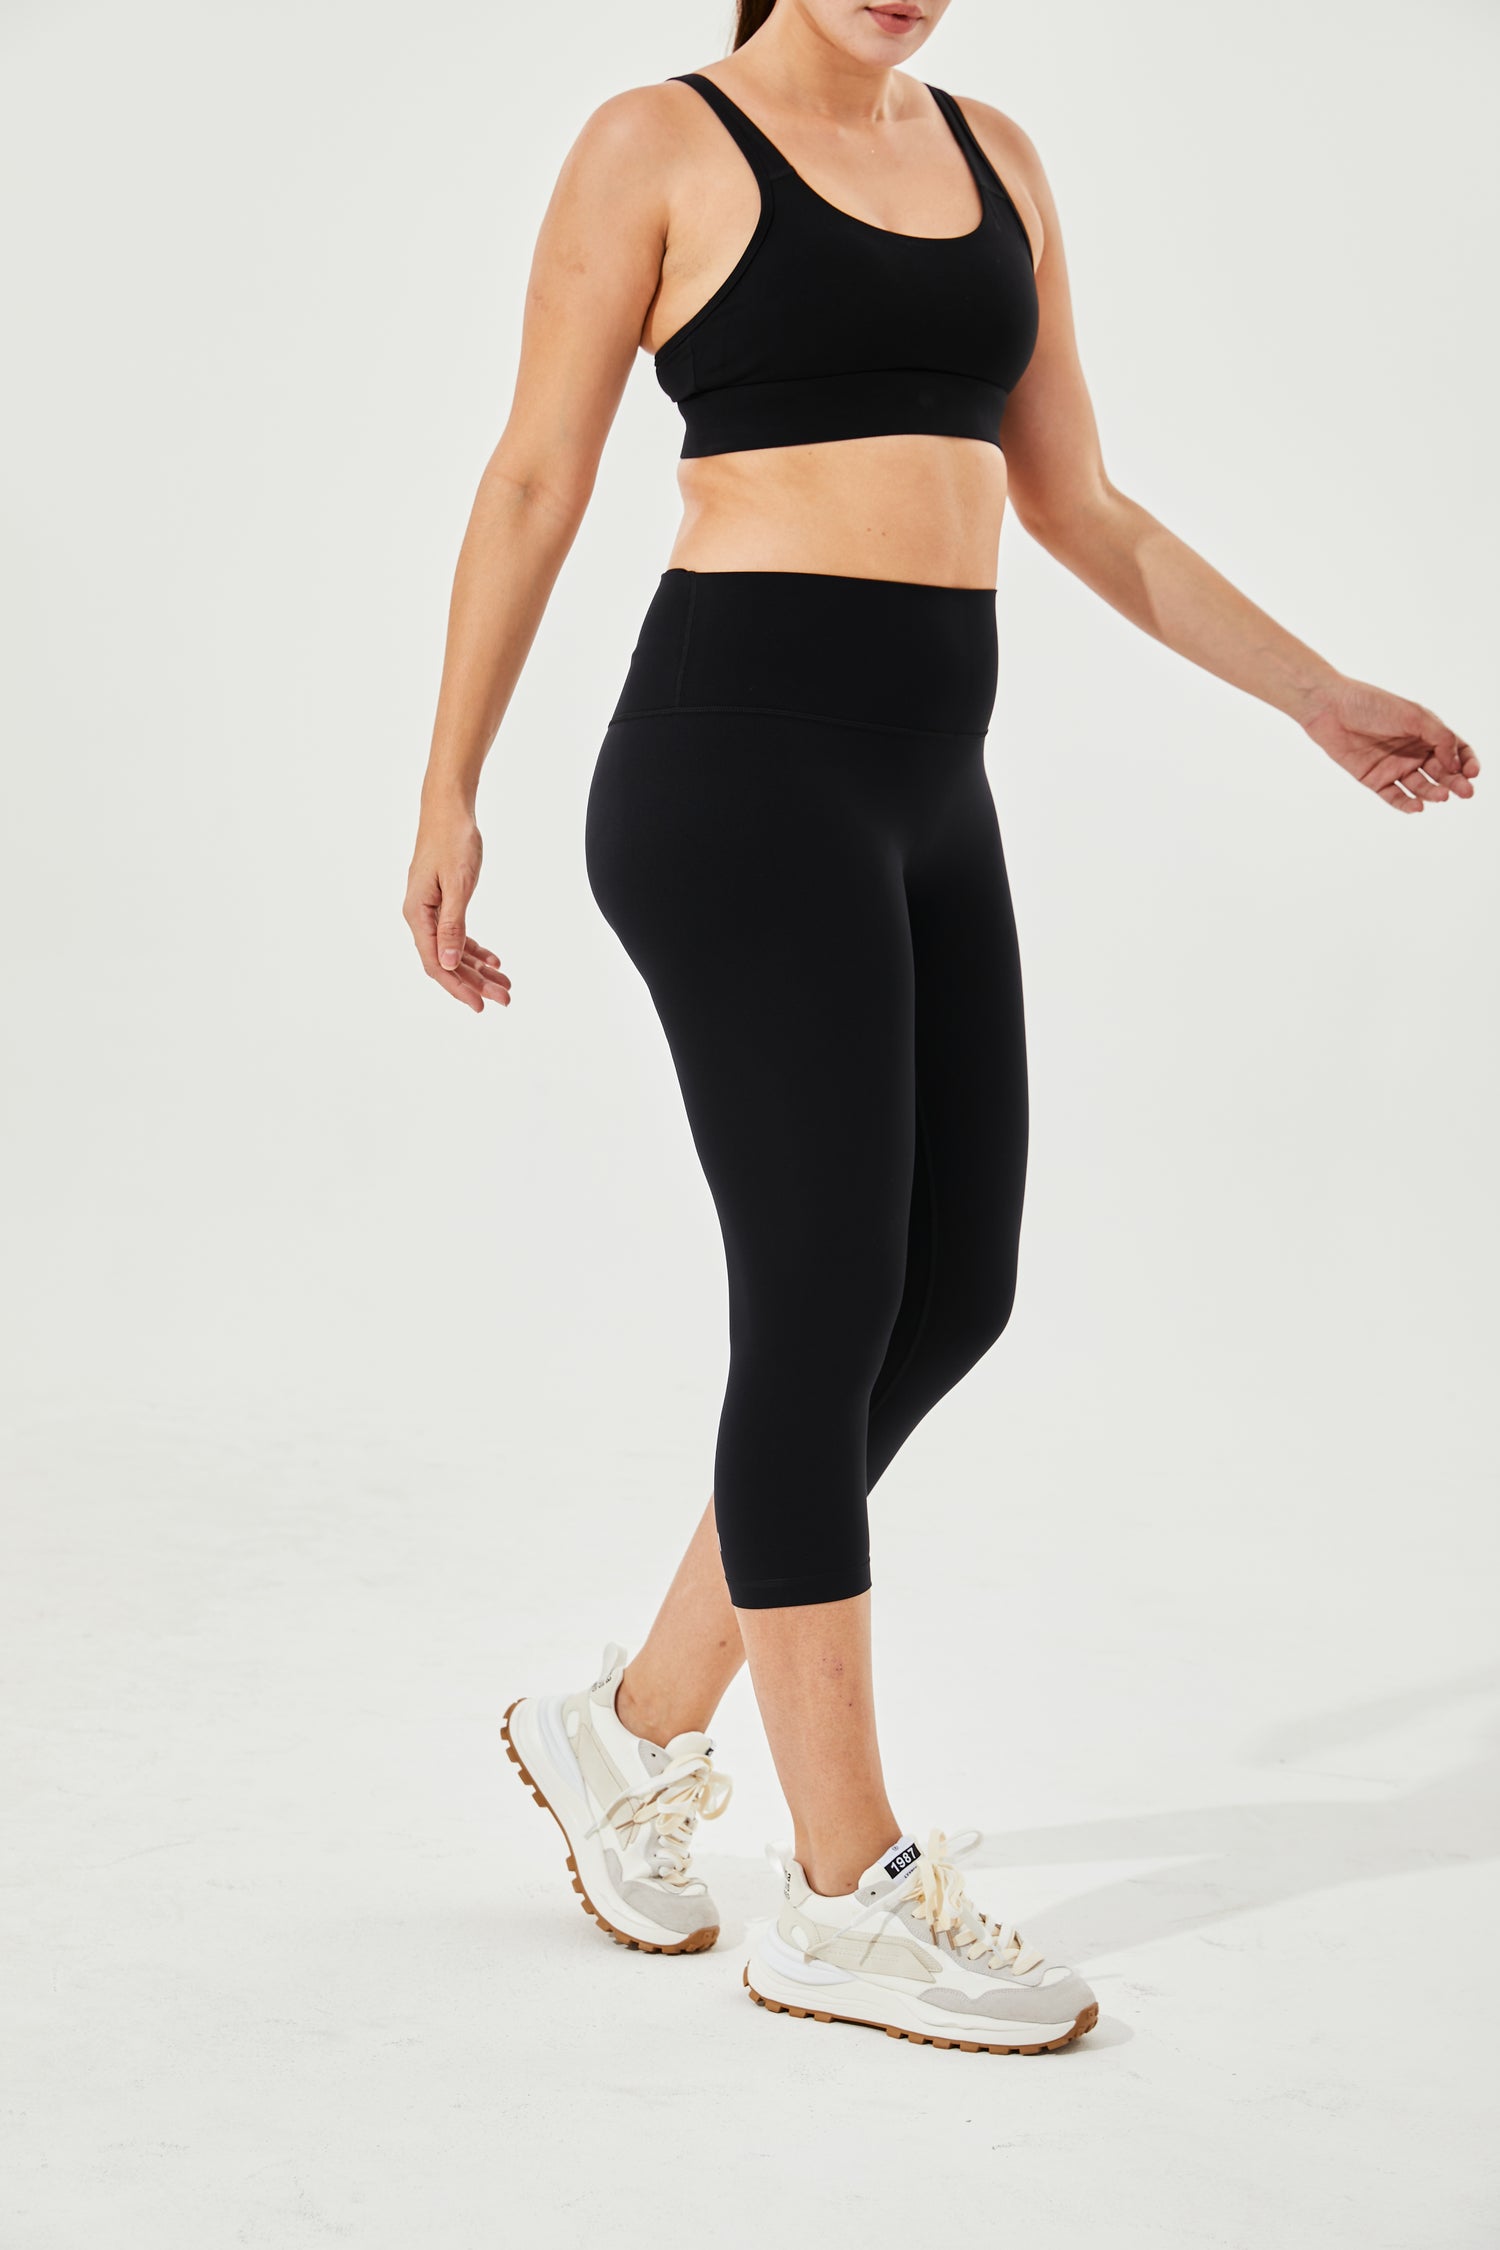 Women's Summer Capri Leggings High Waisted Tummy Control Yoga Workout Gym  Fitness Biker Capris Pants with Pockets 